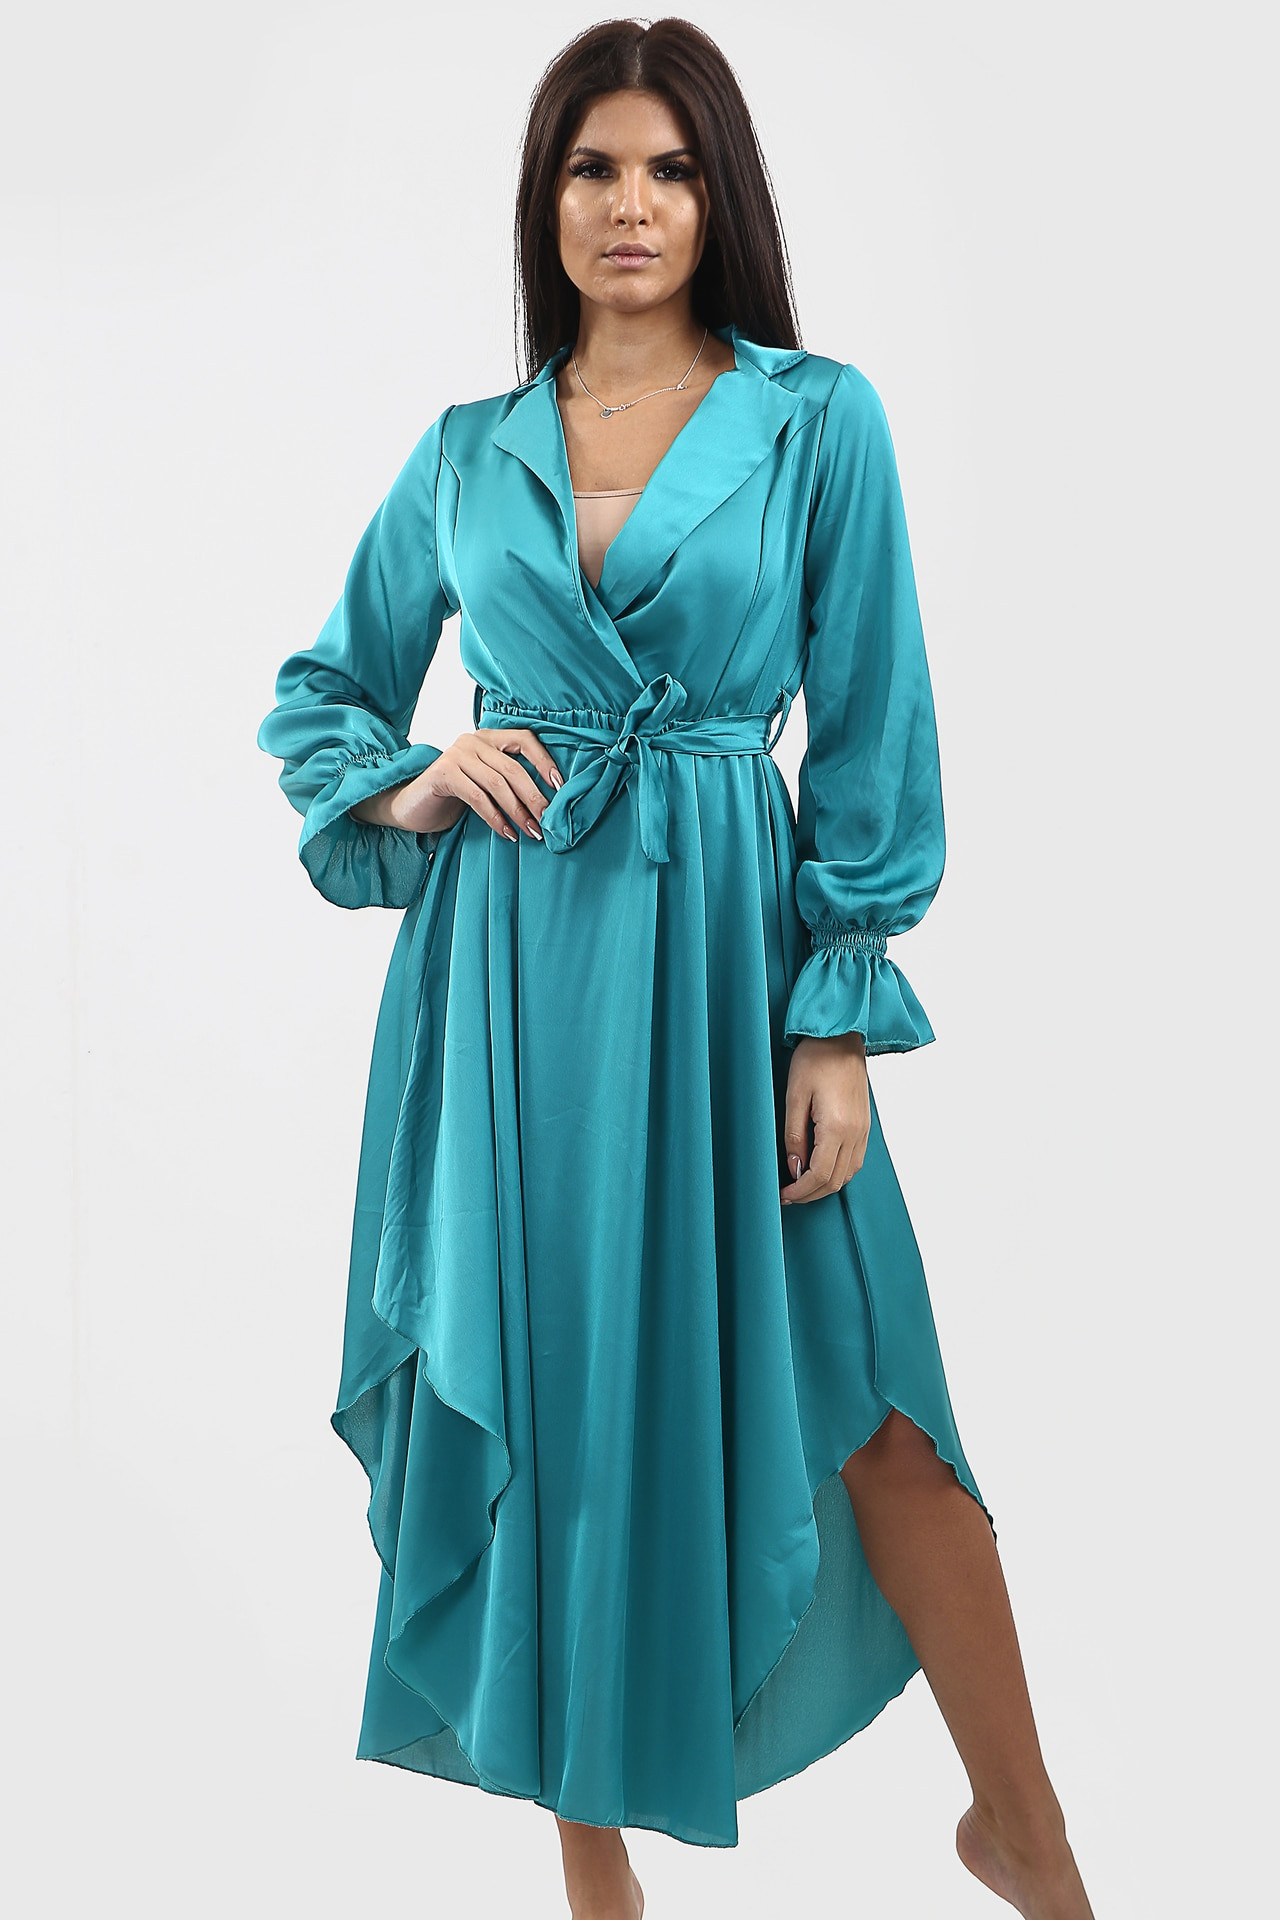 Satin turquoise wrap over long sleeve dress - SELECTAFASHION.COM